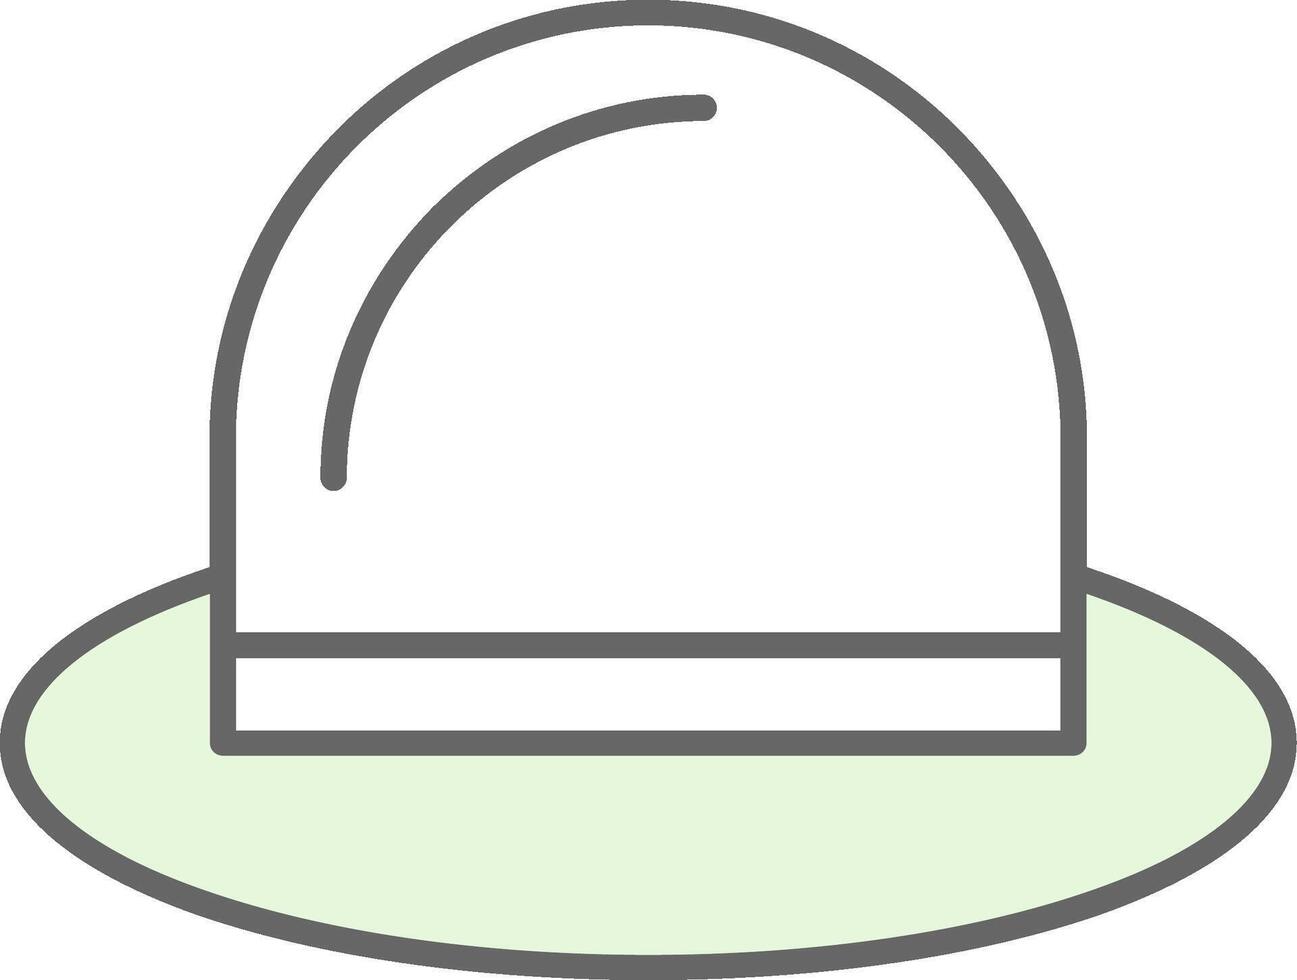 Hat Fillay Icon vector